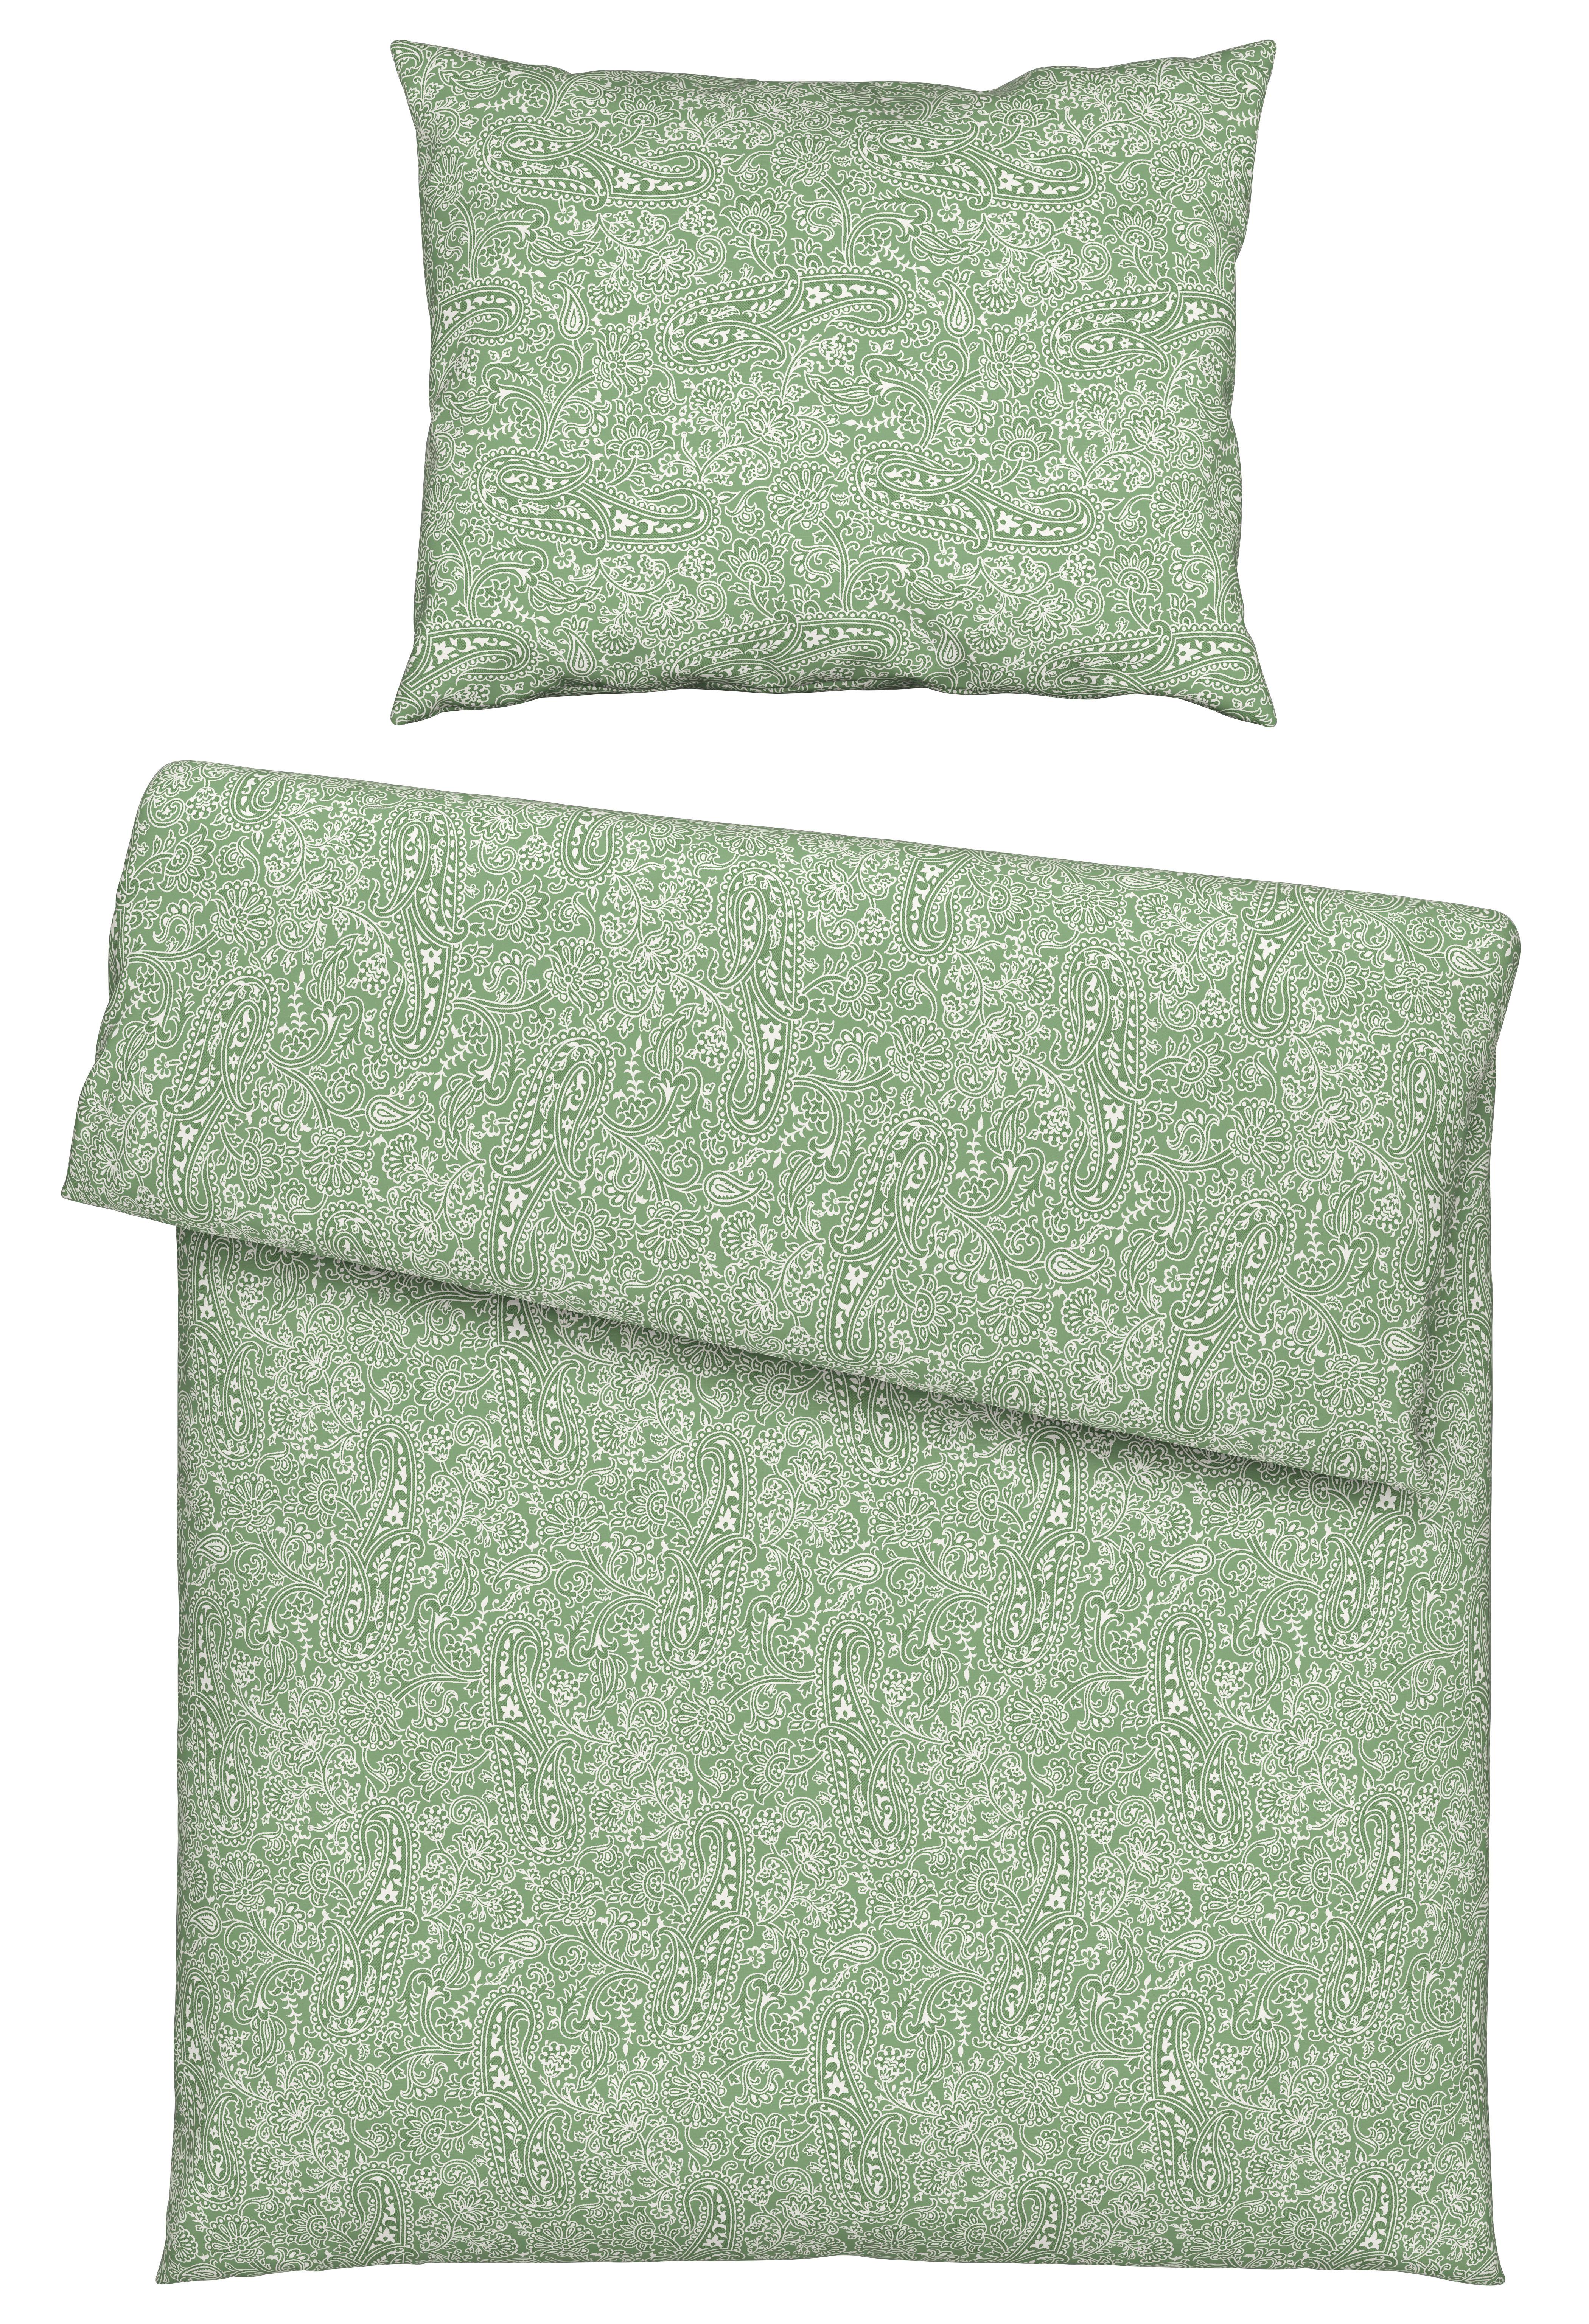 Posteljnina Layla - zelena, Konvencionalno, tekstil (140/200cm) - Modern Living